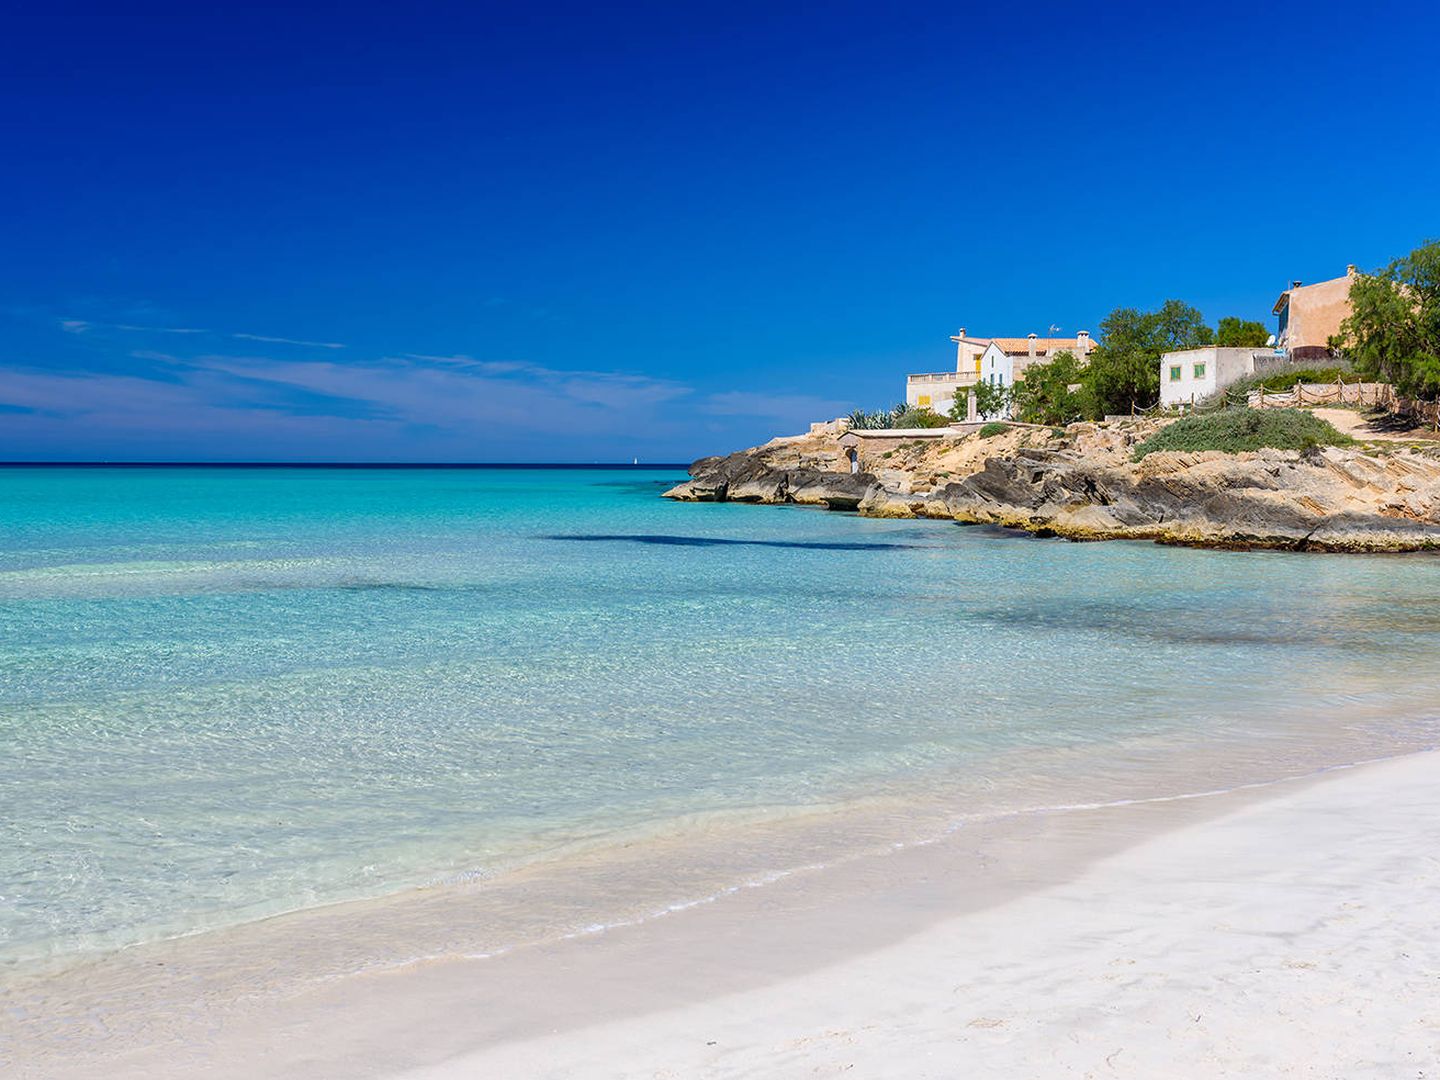 Mallorca. (Shutterstock)